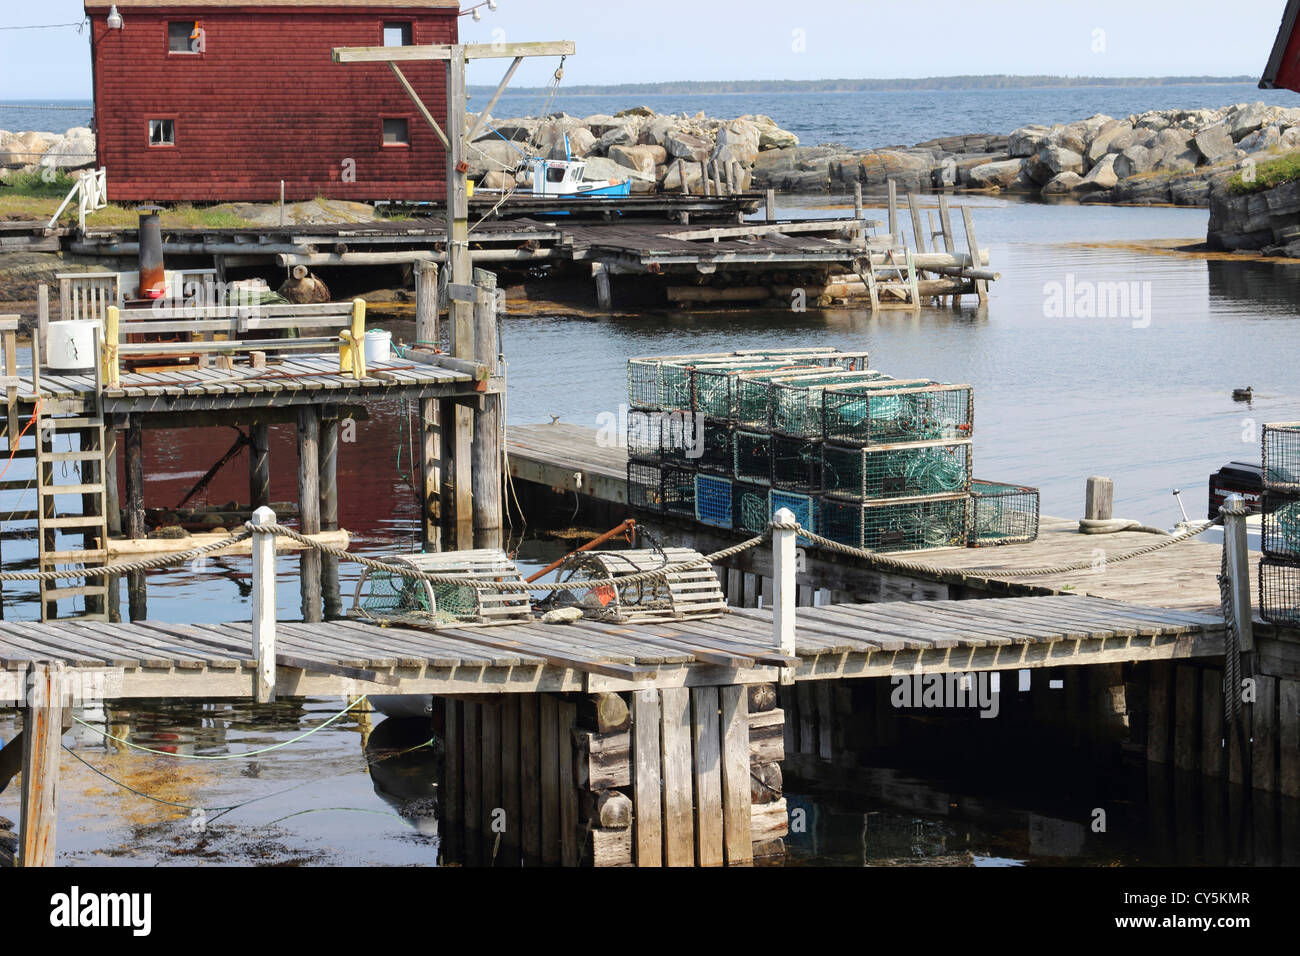 Canada Nova Scotia Atlantic Maritime Provinces Lunenburg Blue Rocks lobster traps dock Stock Photo